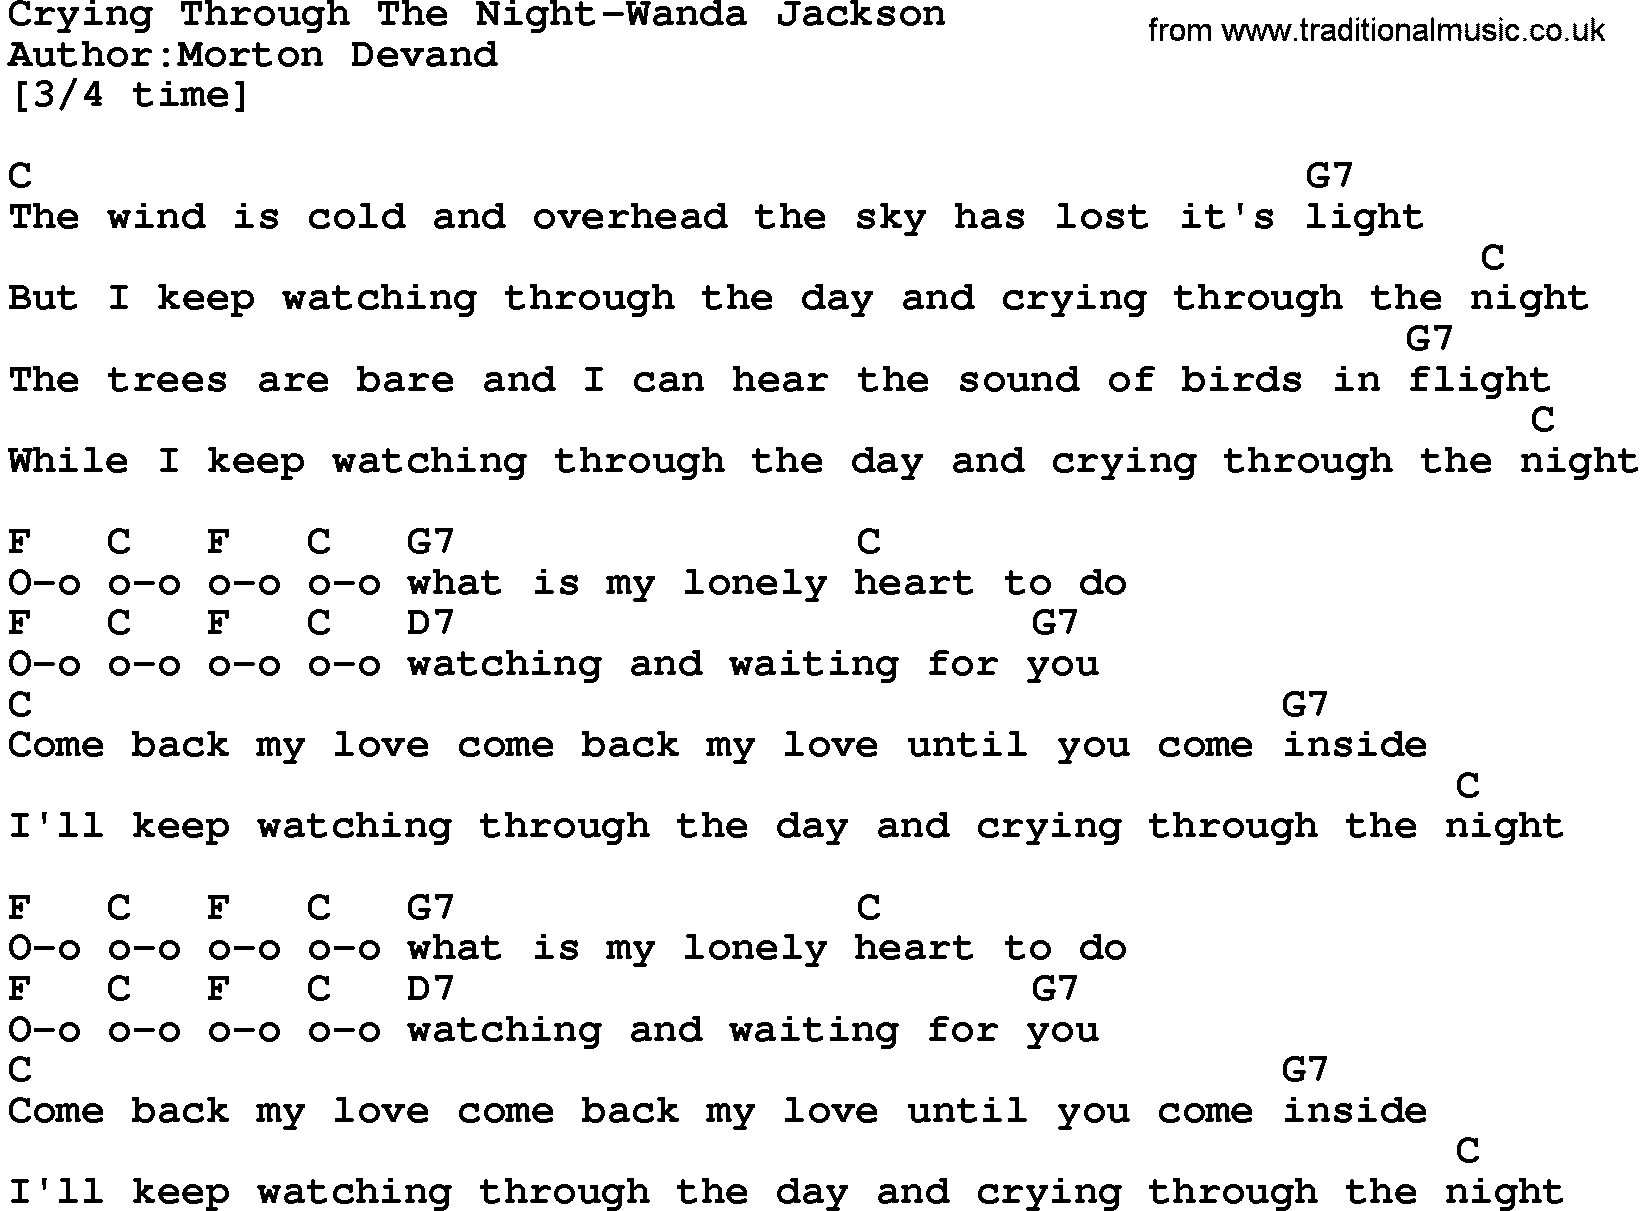 Country music song: Crying Through The Night-Wanda Jackson lyrics and chords